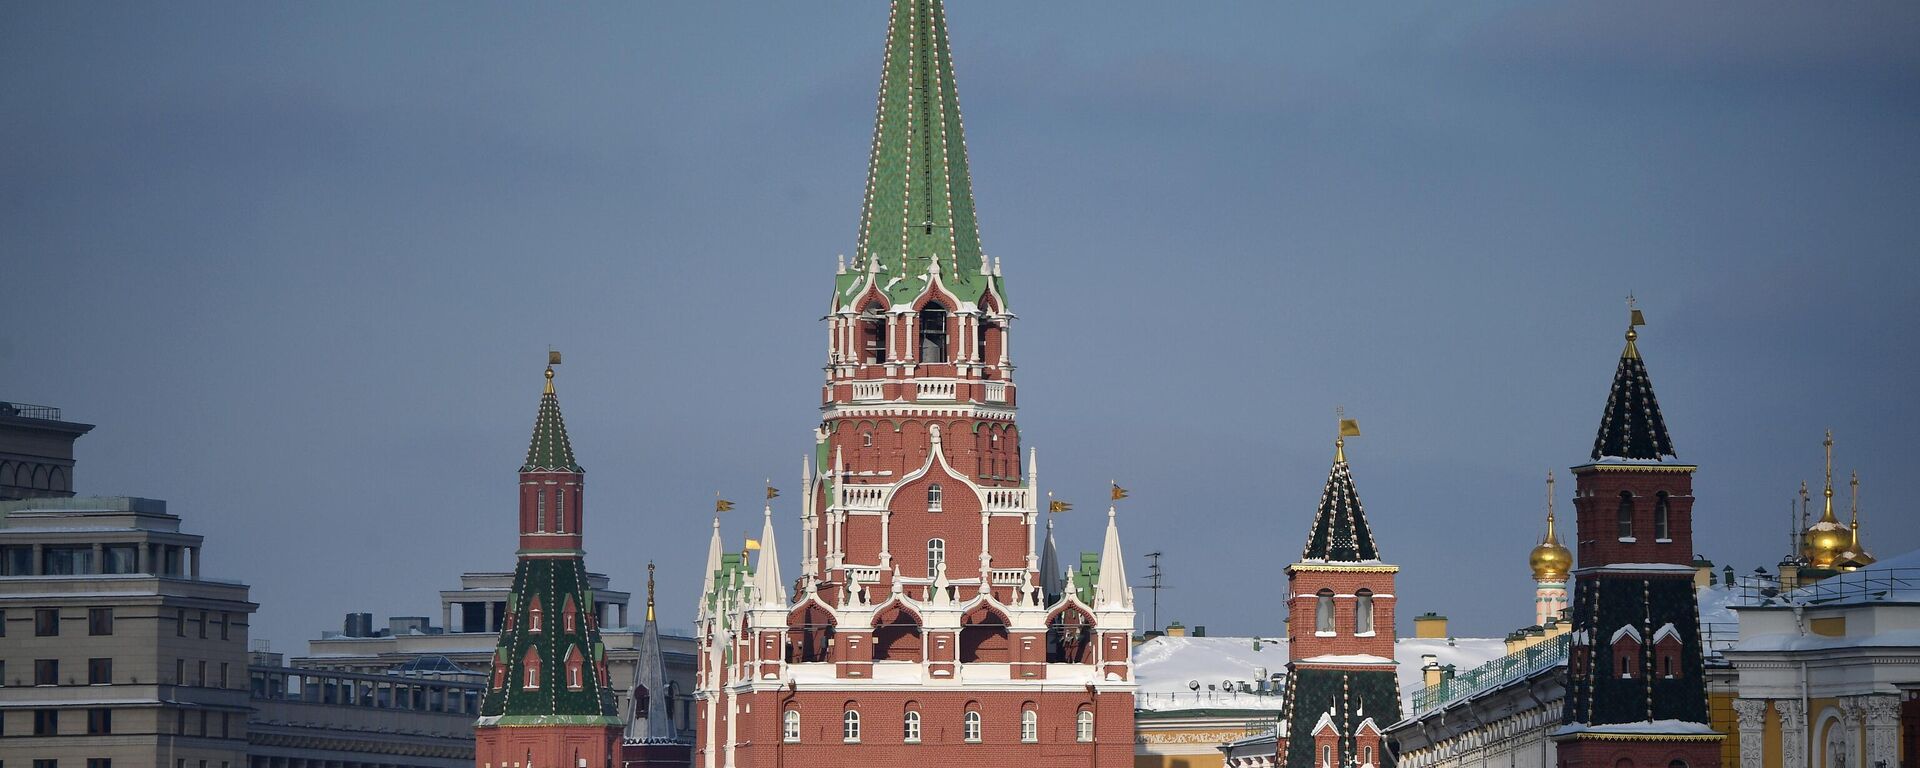 El Kremlin de Moscú, Rusia - Sputnik Mundo, 1920, 21.07.2021